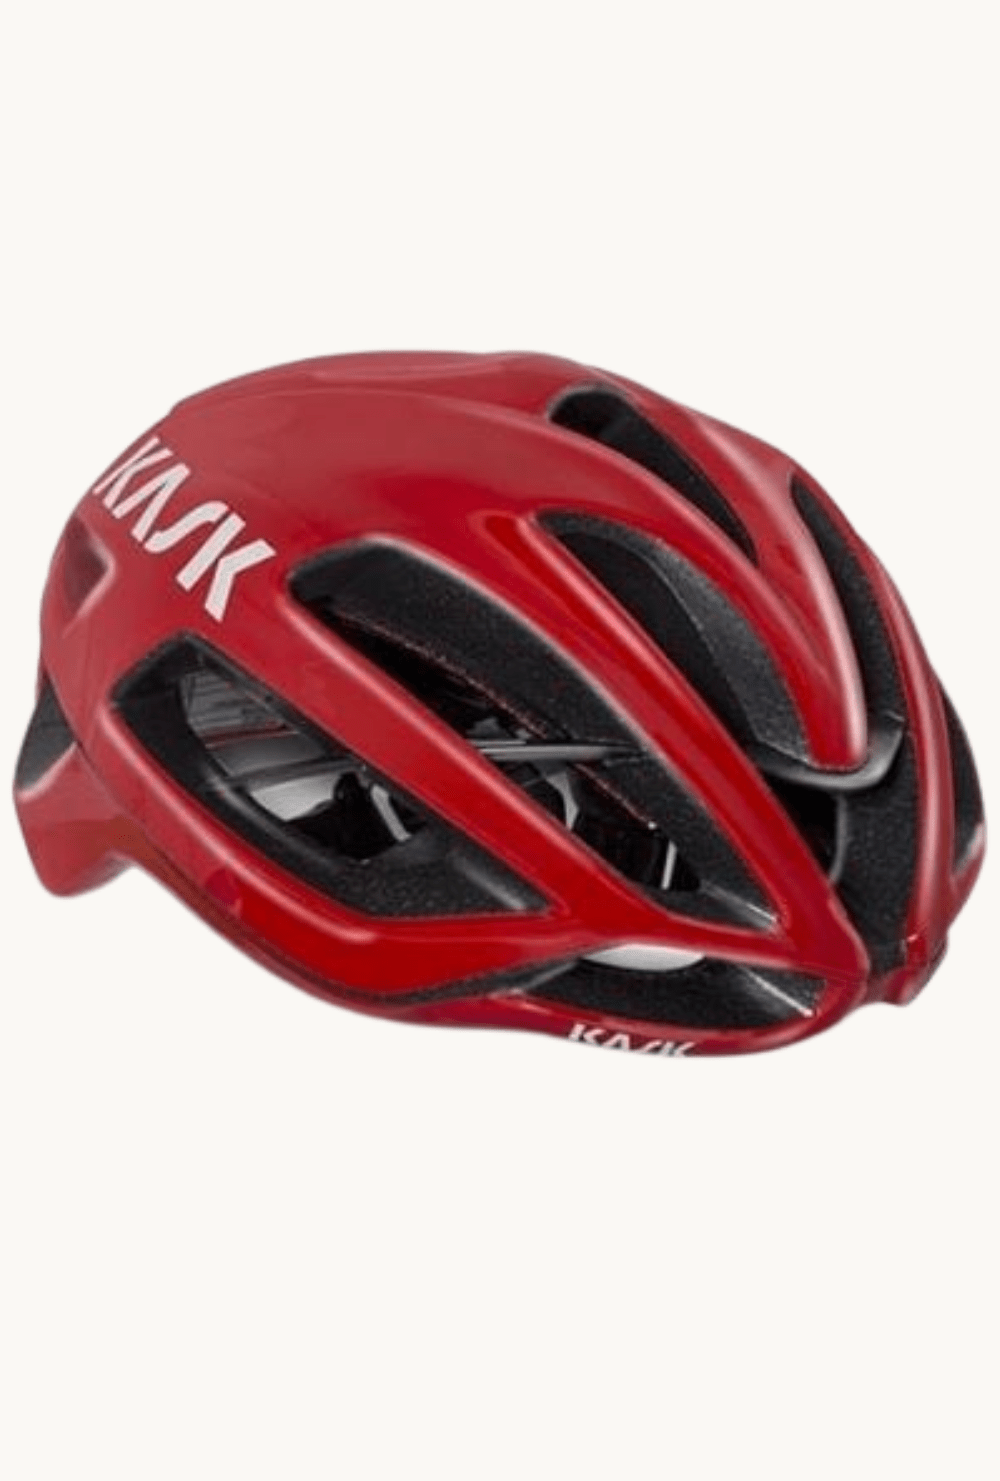 Helmet - Kask Protone Redmedium (52-58cm) / Red